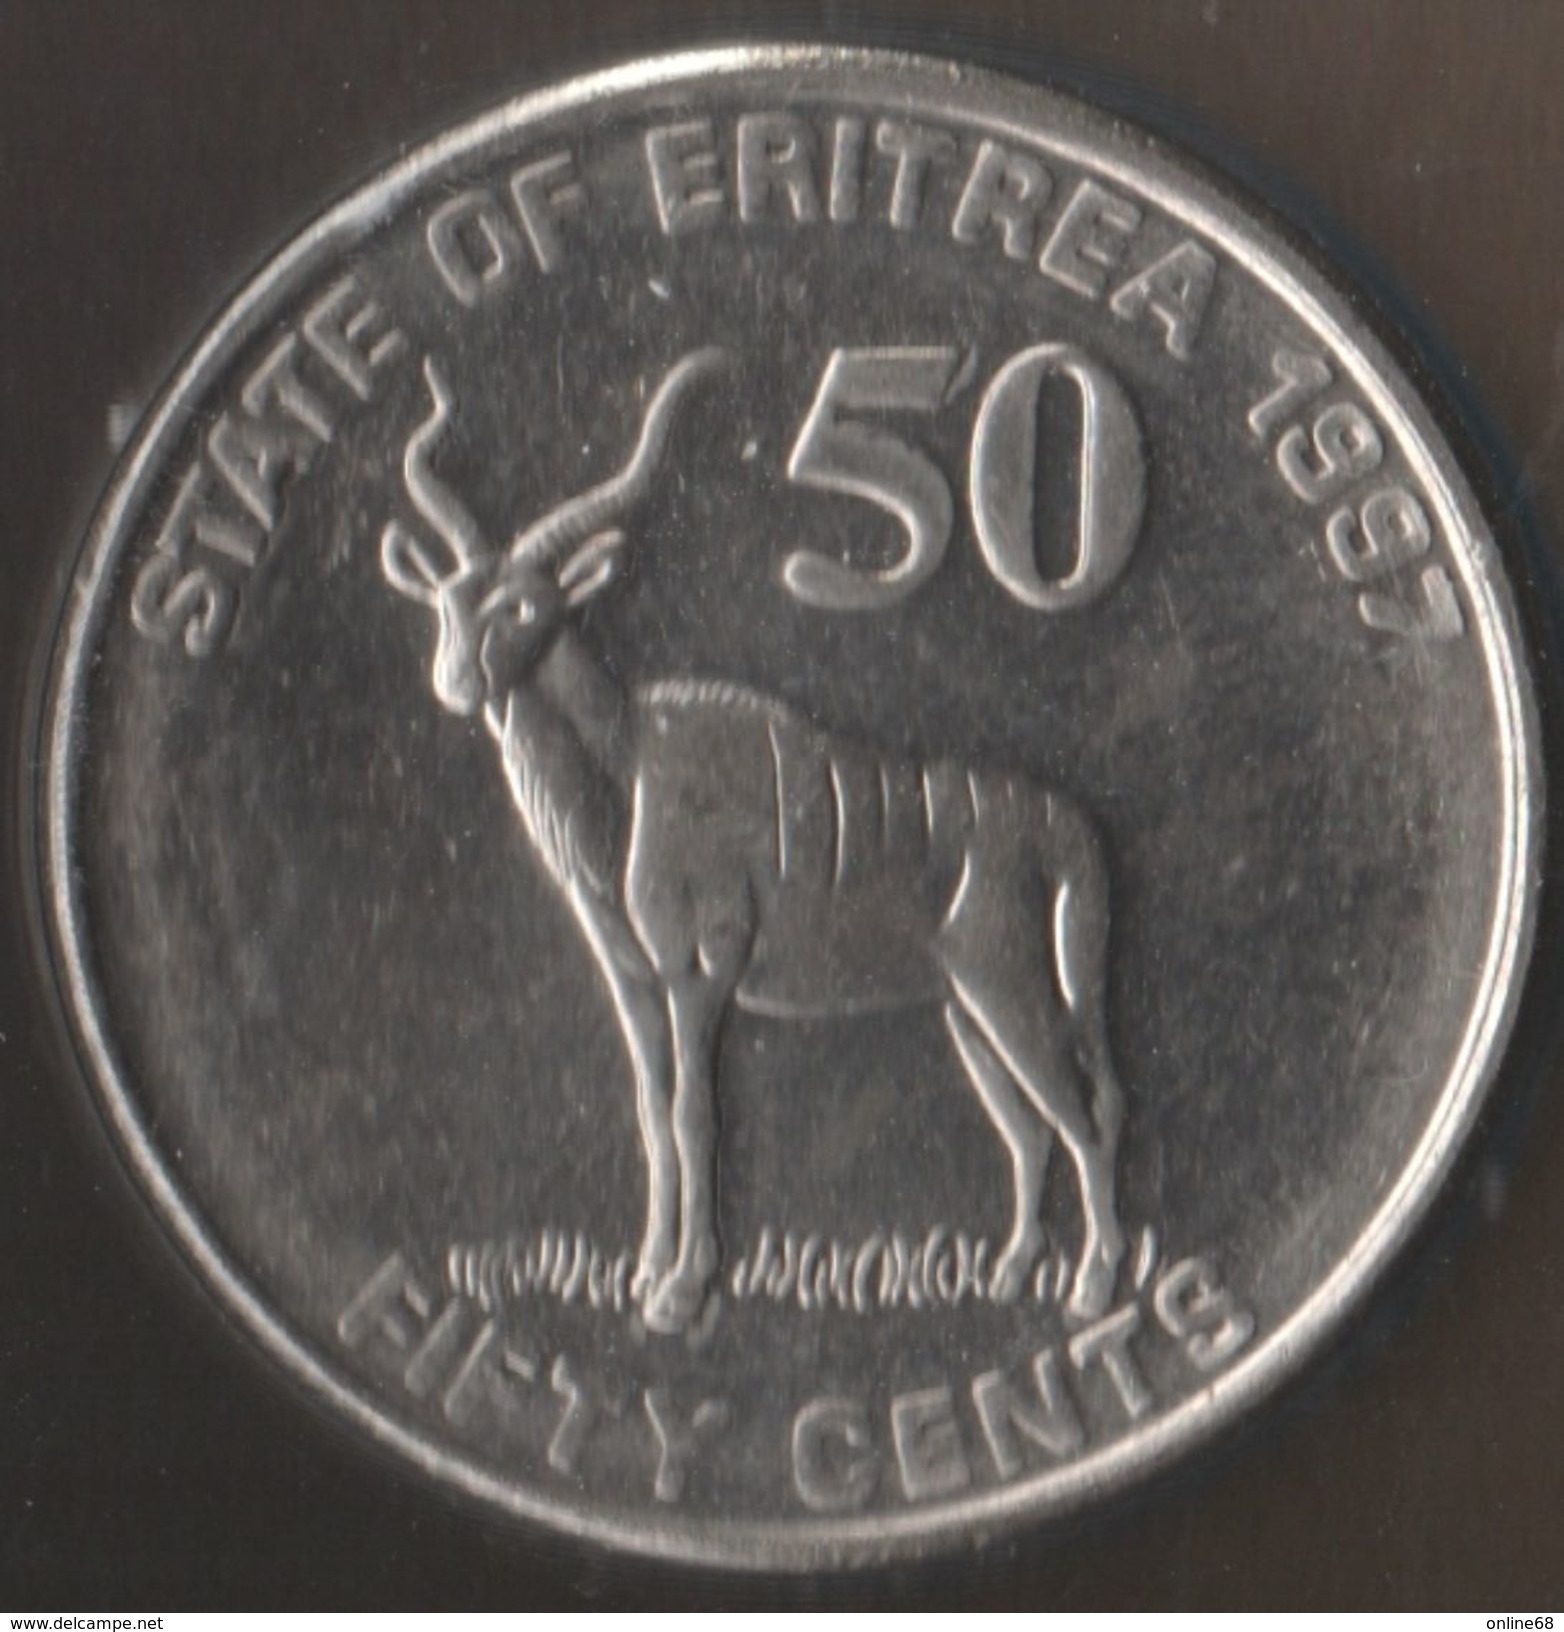 ERITREA 50 CENTS 1997 KM# 47 ANIMAL Antelope - Greater Kudu - Eritrea